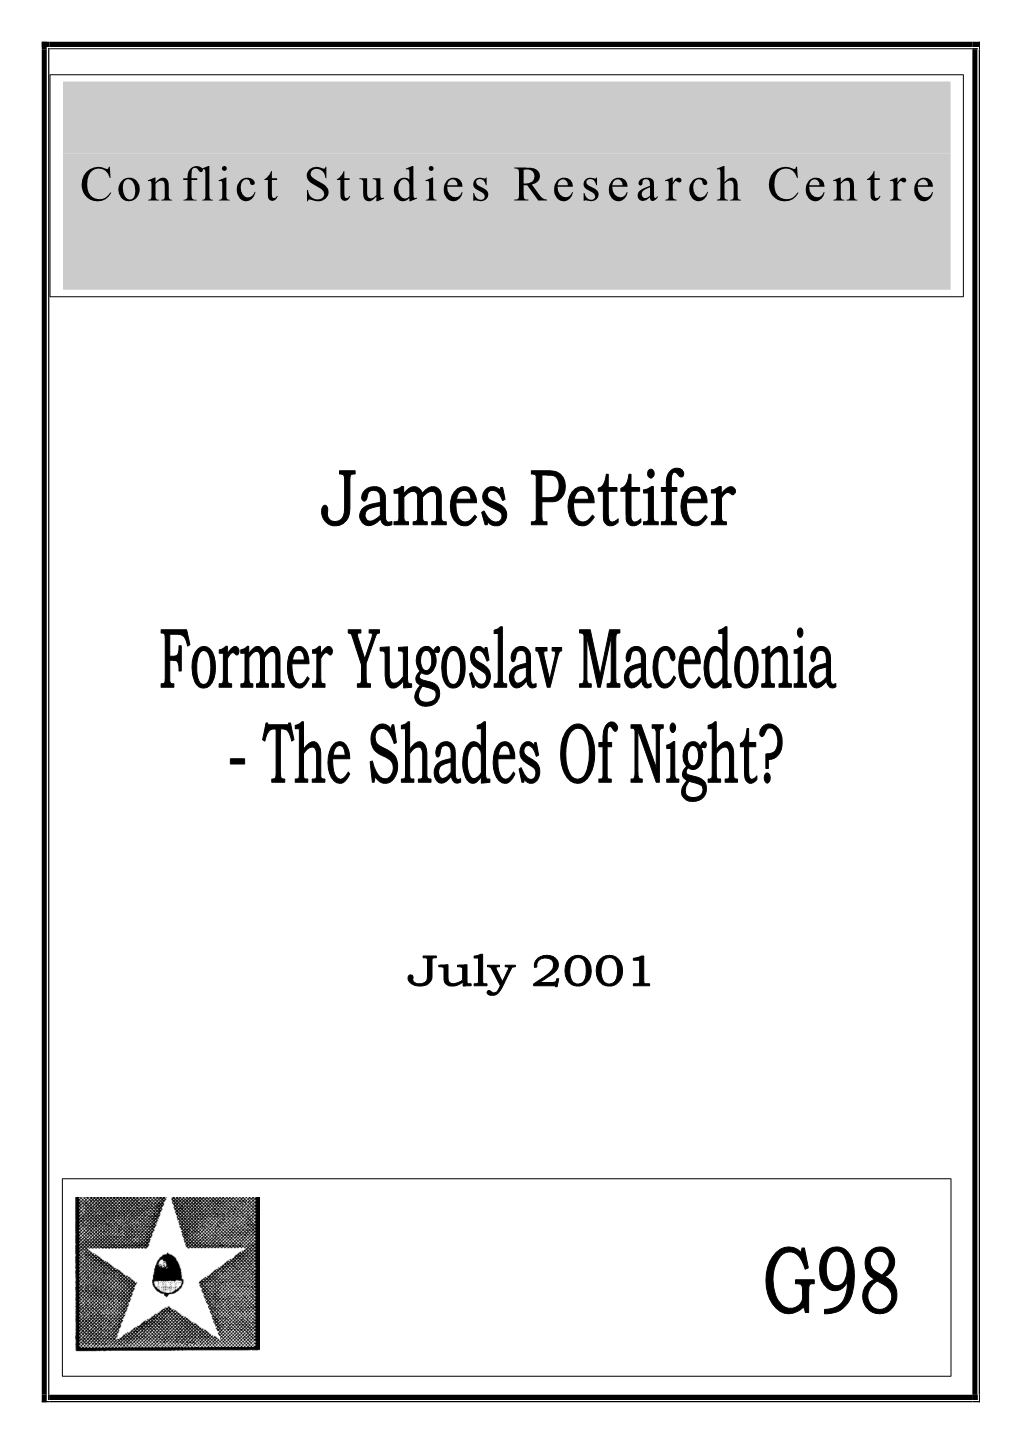 Former Yugoslav Macedonia - the Shades of Night?